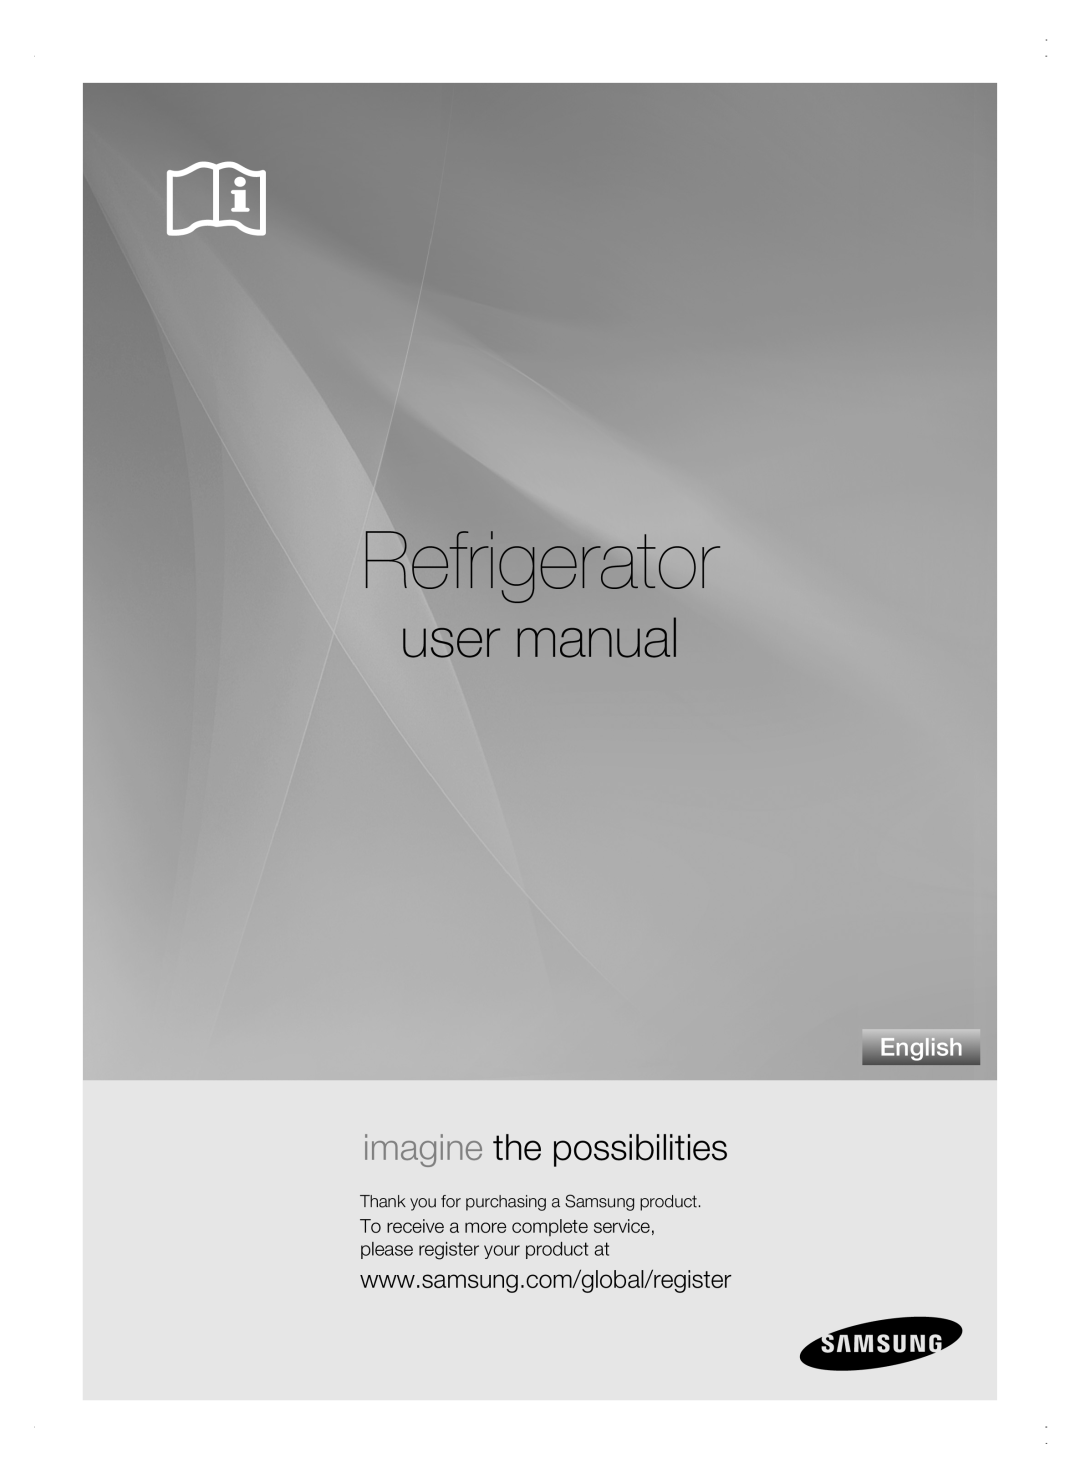 Samsung RSG5 user manual Refrigerator, imagine the possibilities, English 